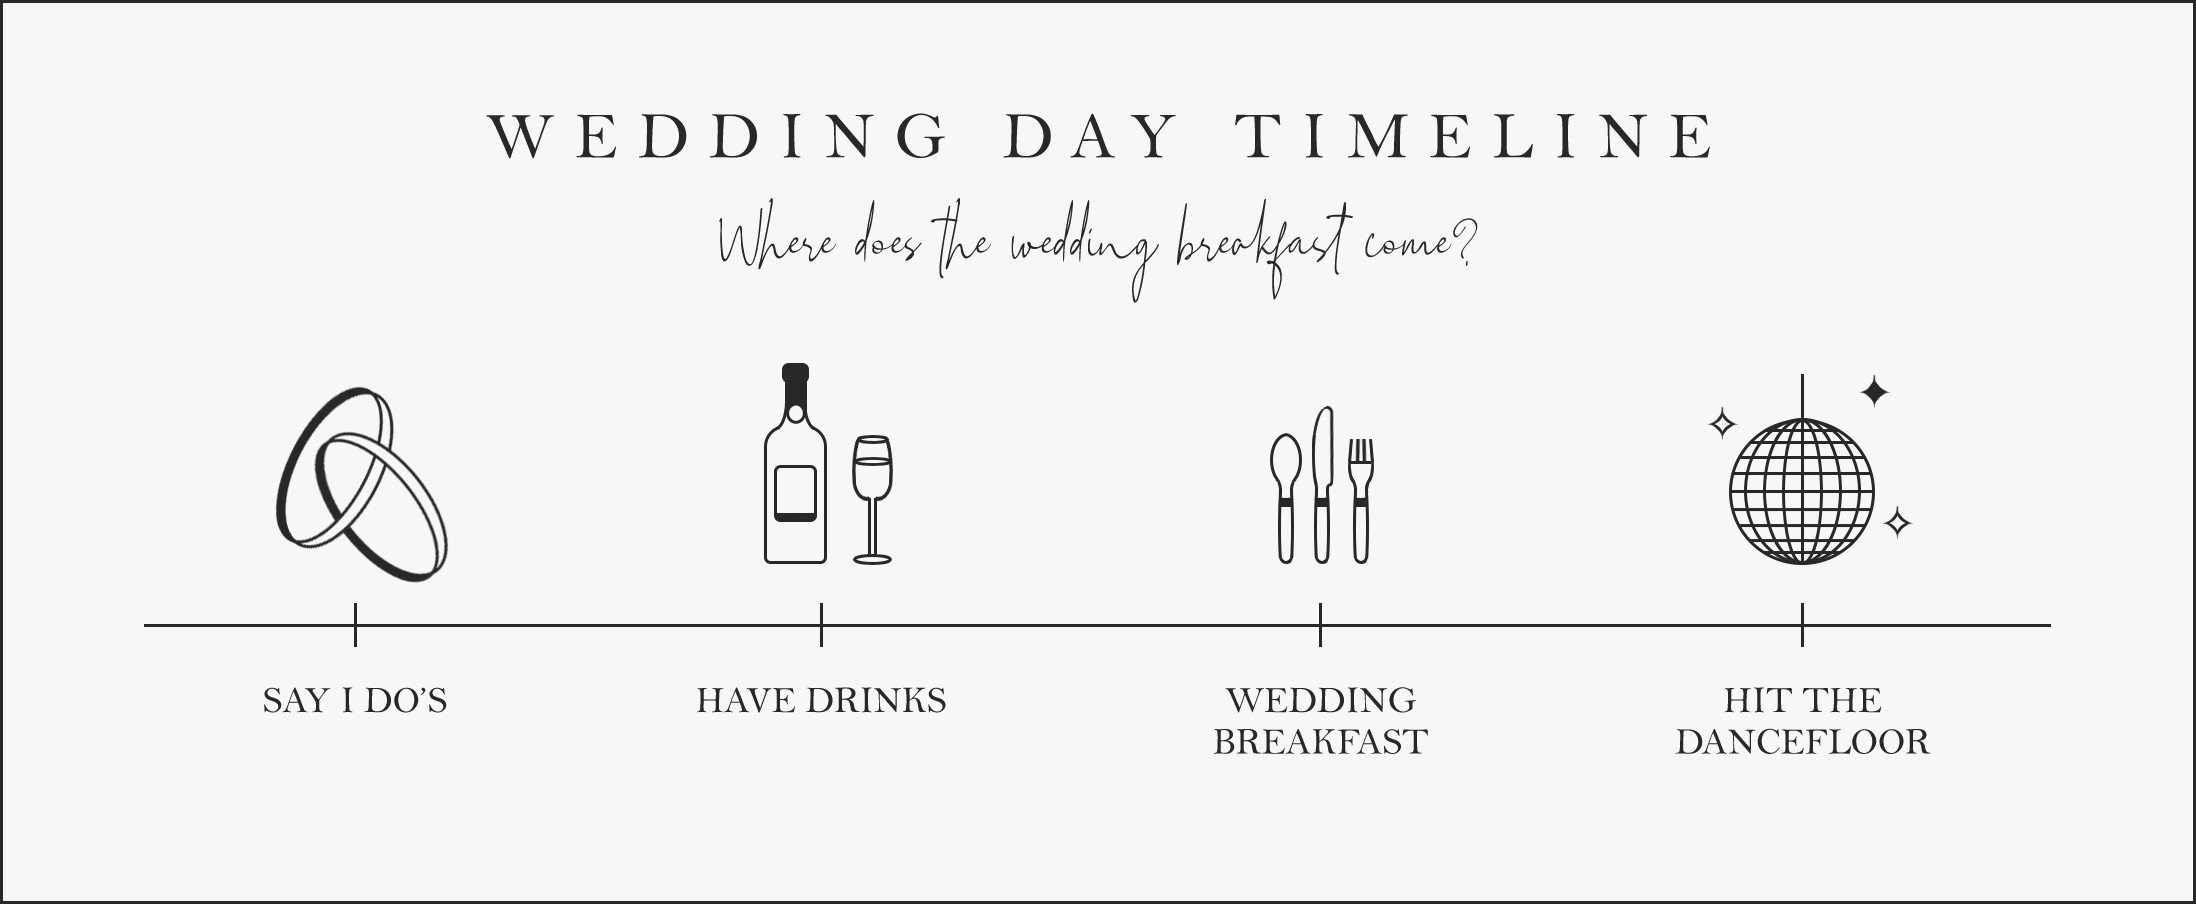 When to Serve a Wedding Breakfast Timeline